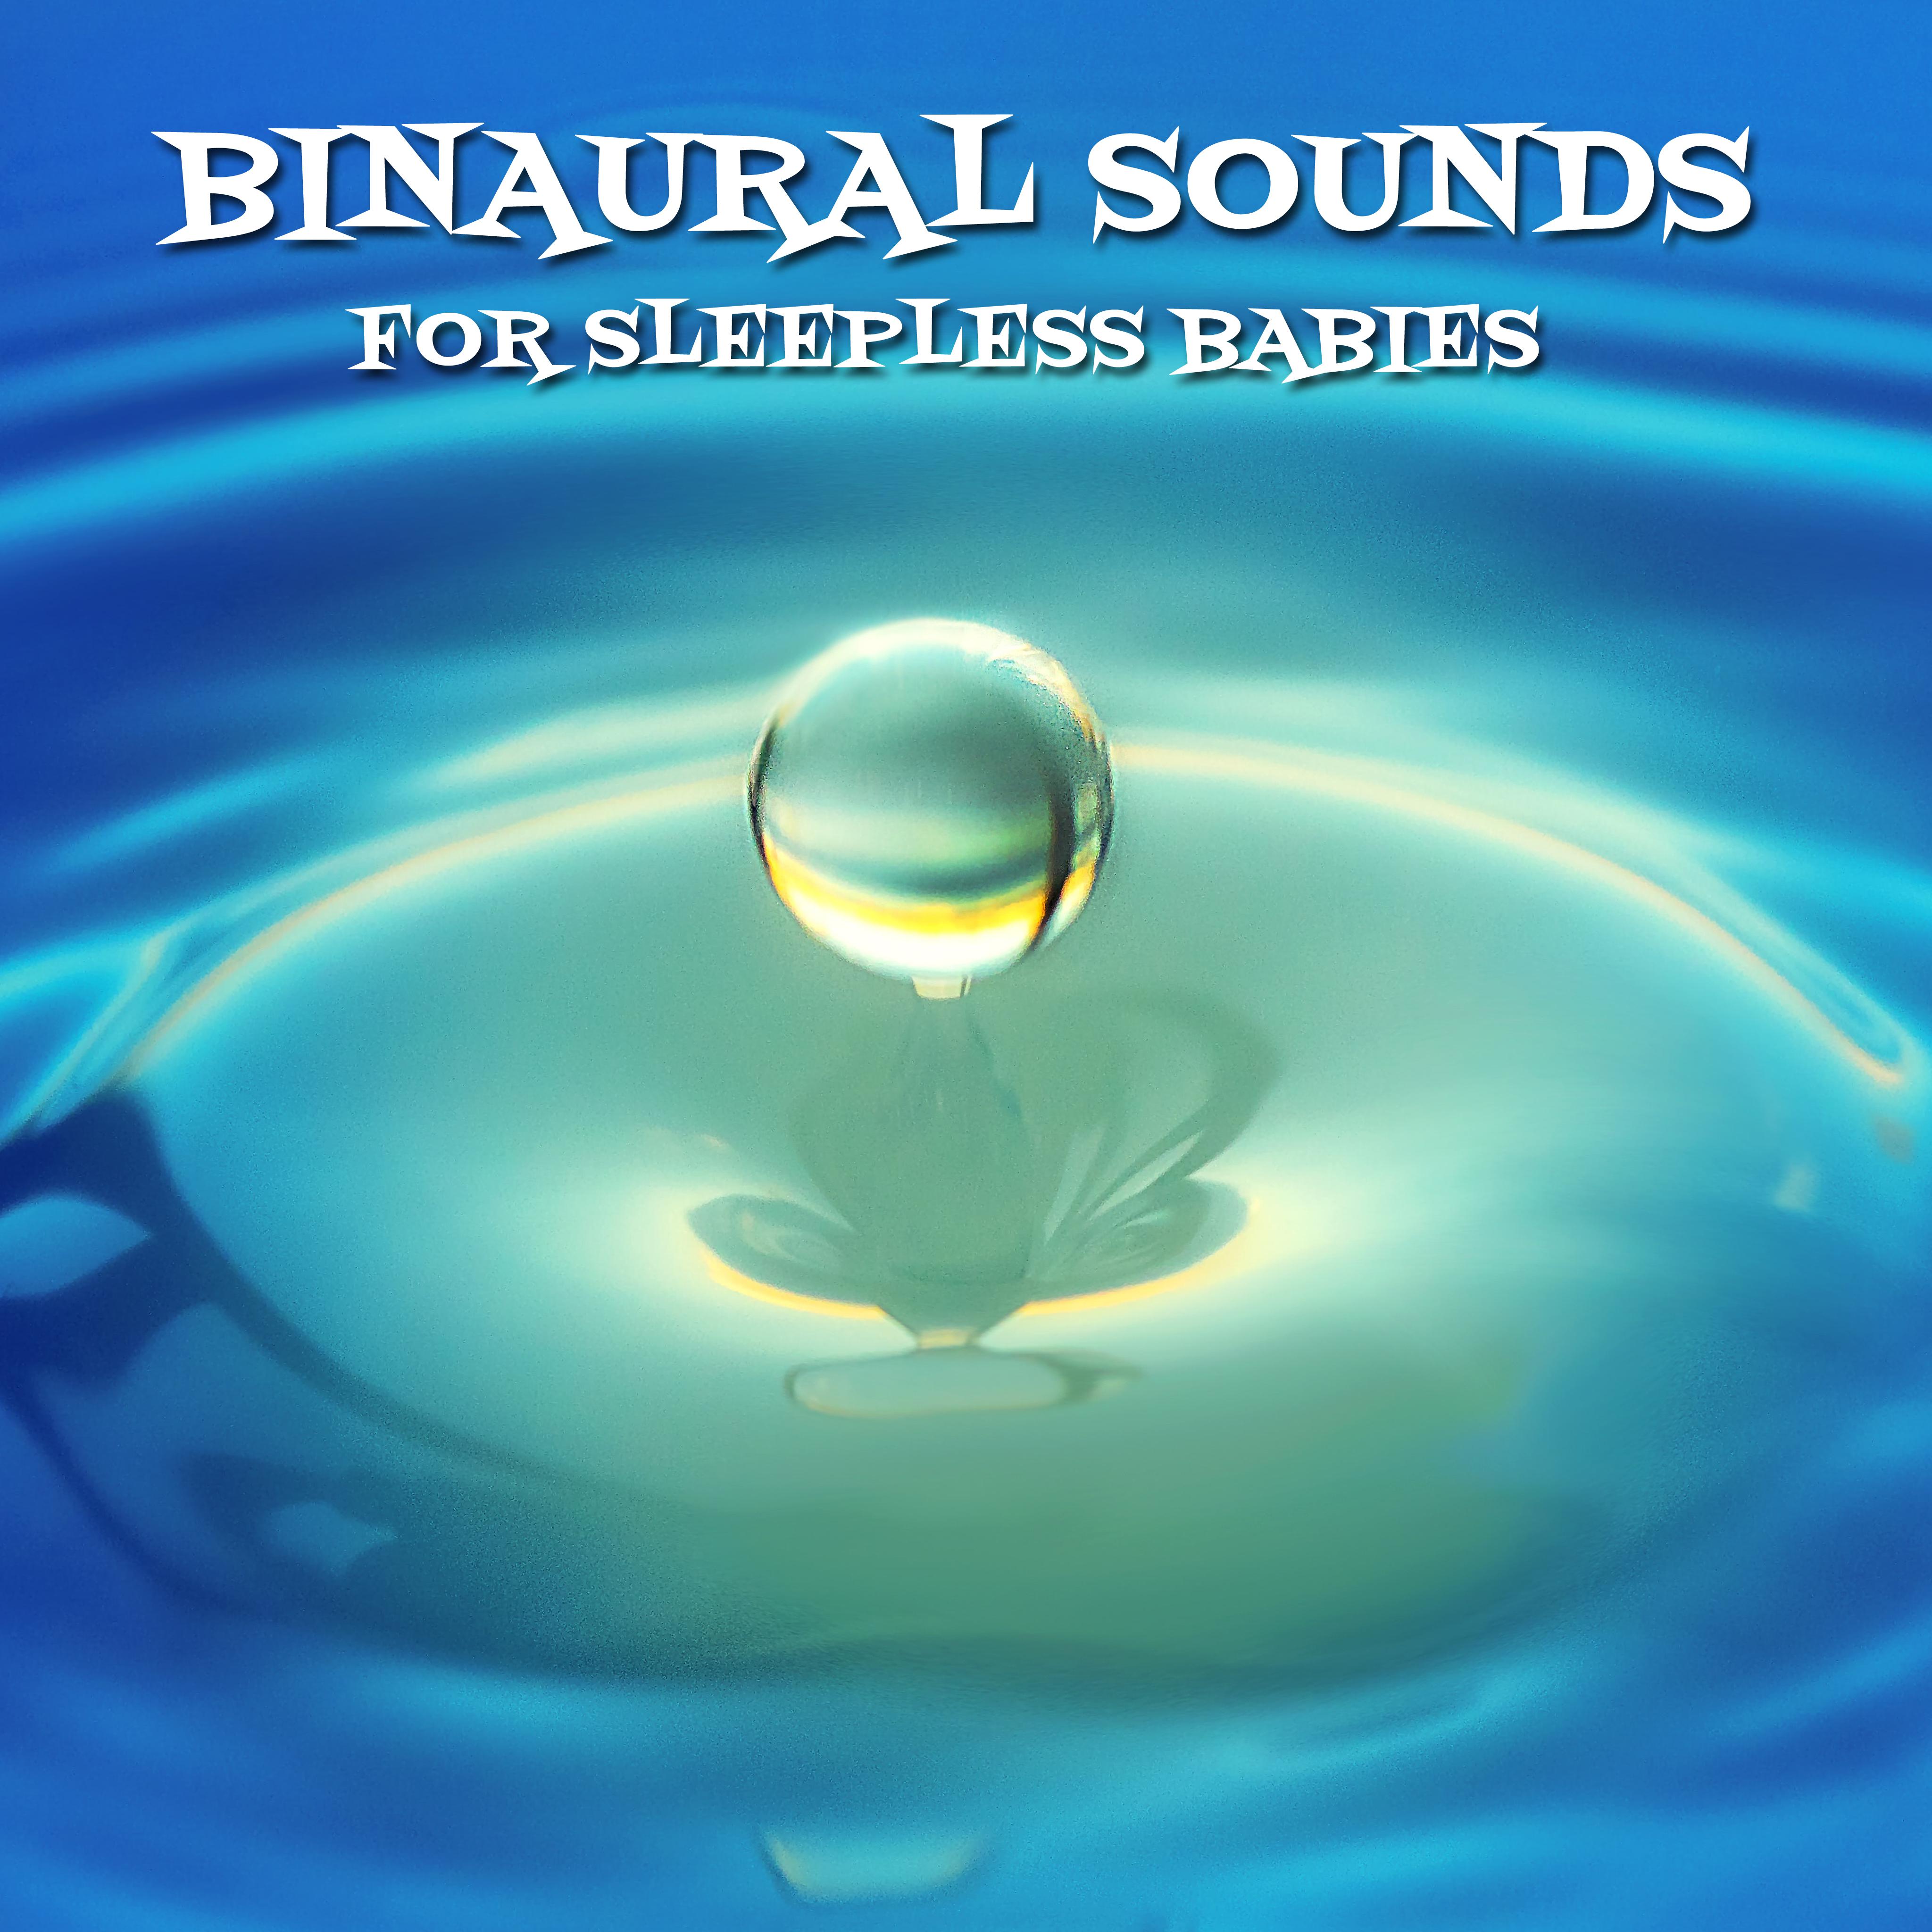 15 Binaural Sounds for Sleepless Babies